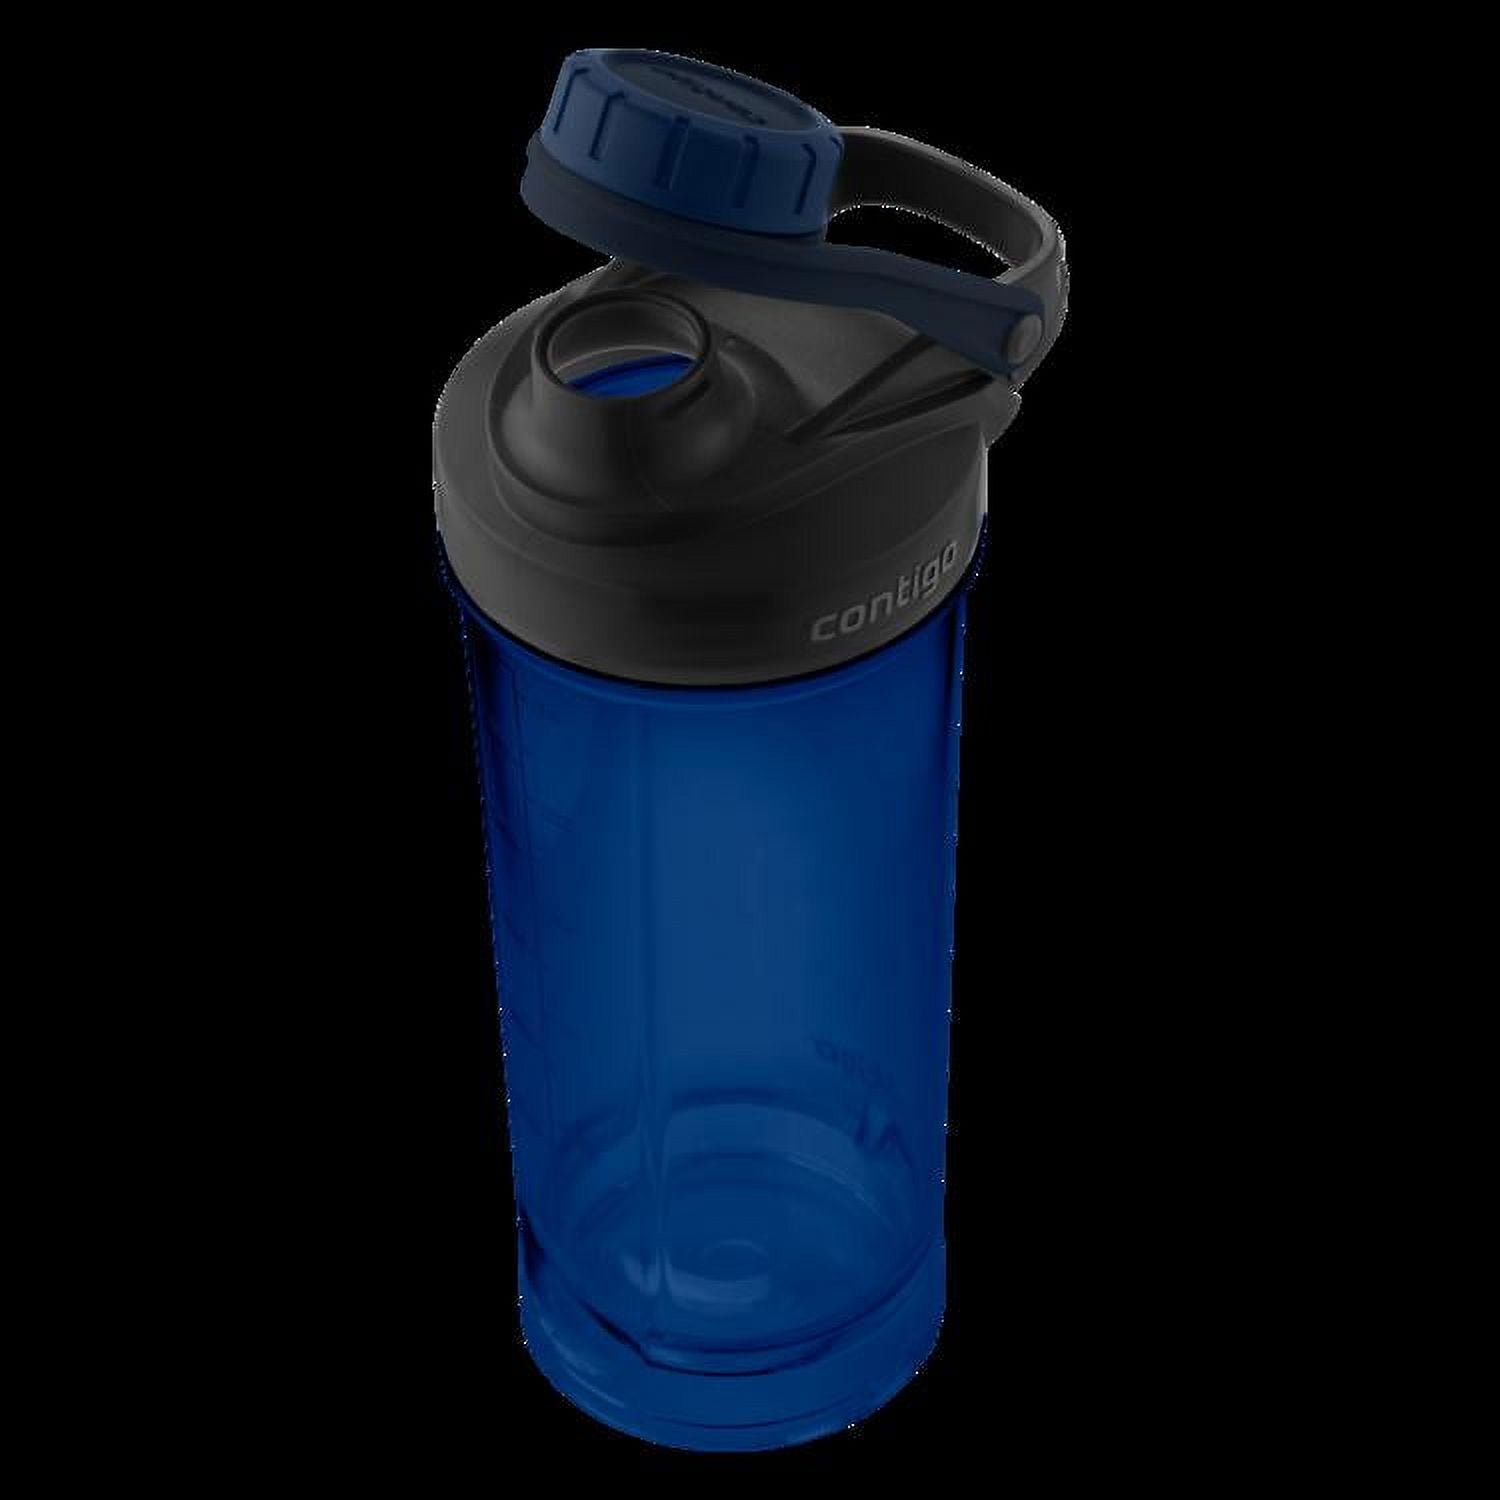 Contigo® Shake and Go Fit Mixer Bottle - Black / Clear, 28 oz - Pay Less  Super Markets